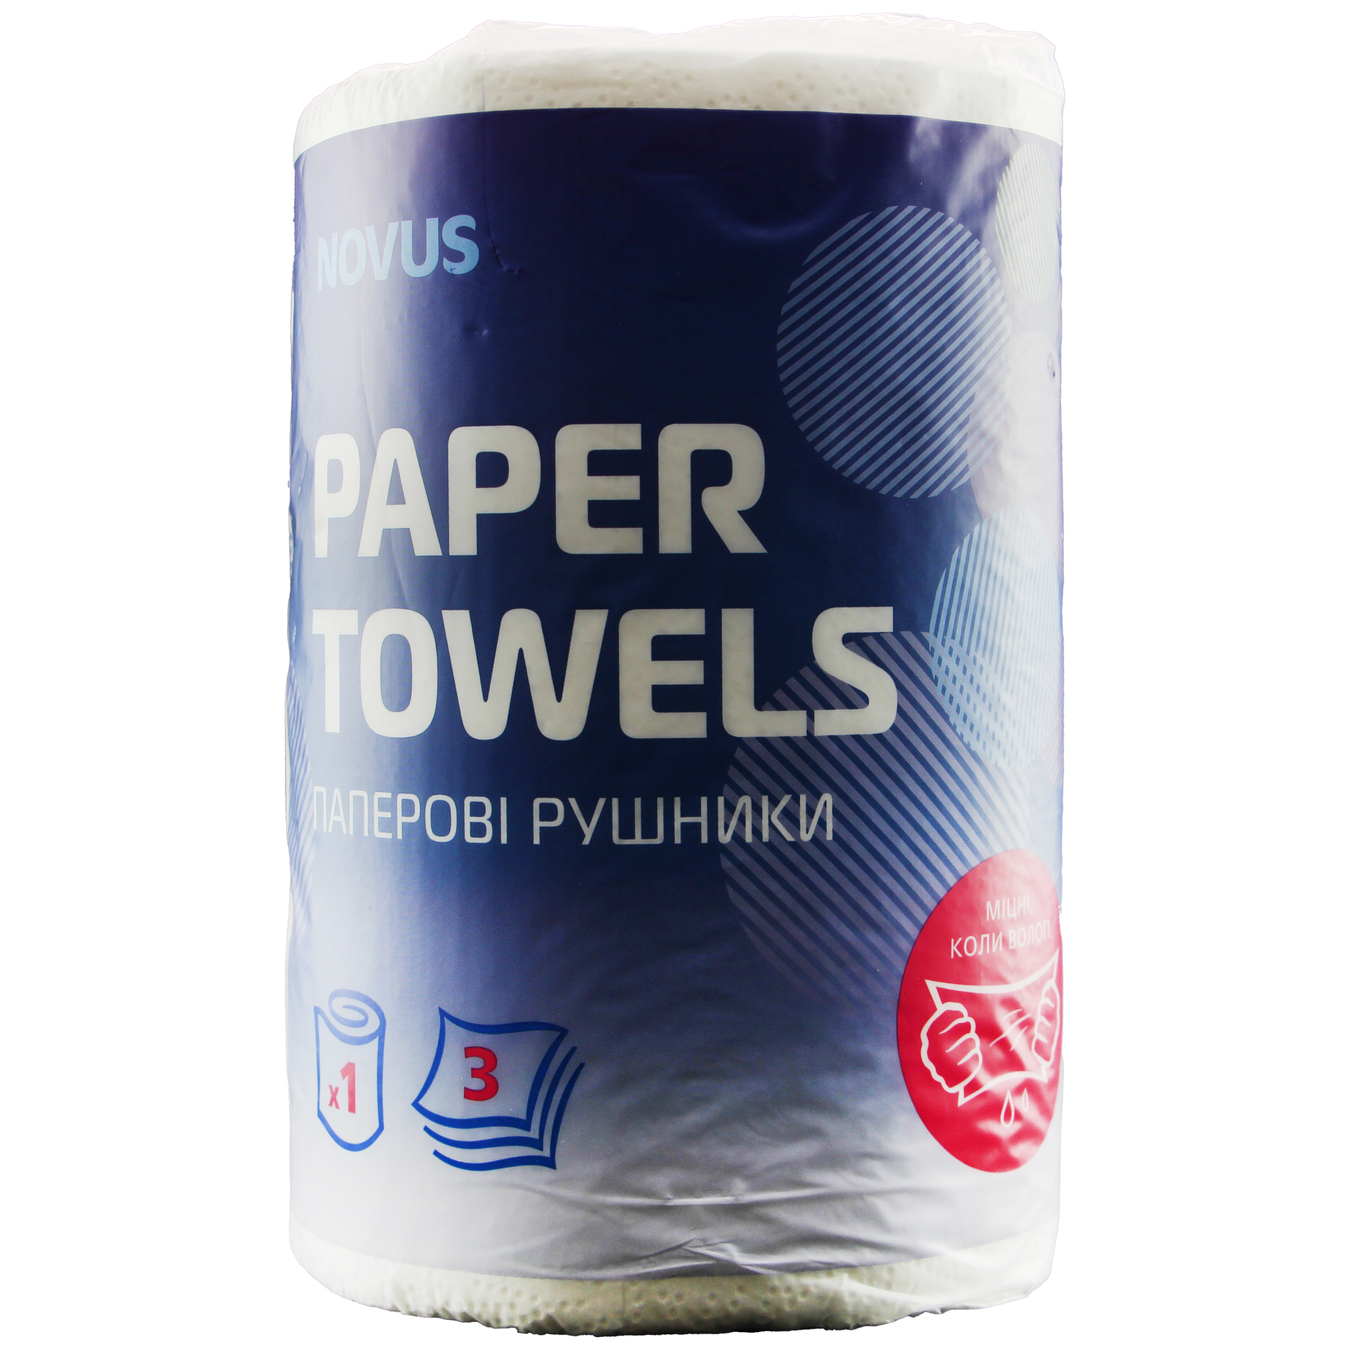 Novus Paper Towels 3-Layer 1 Roll